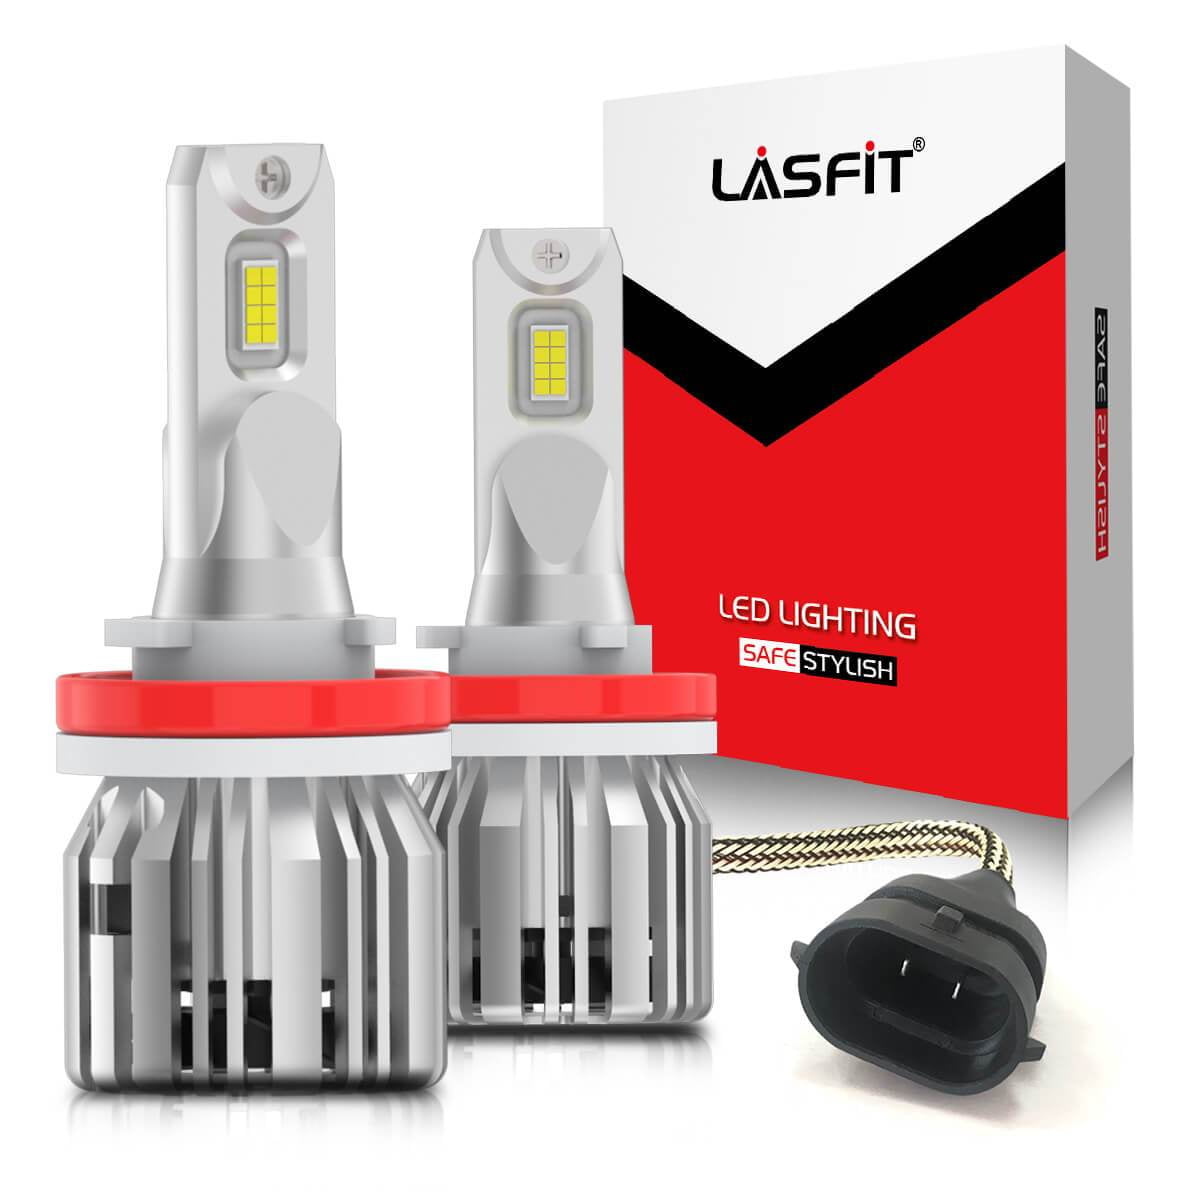 LED Headlight H1 50W RS+ Slim Series